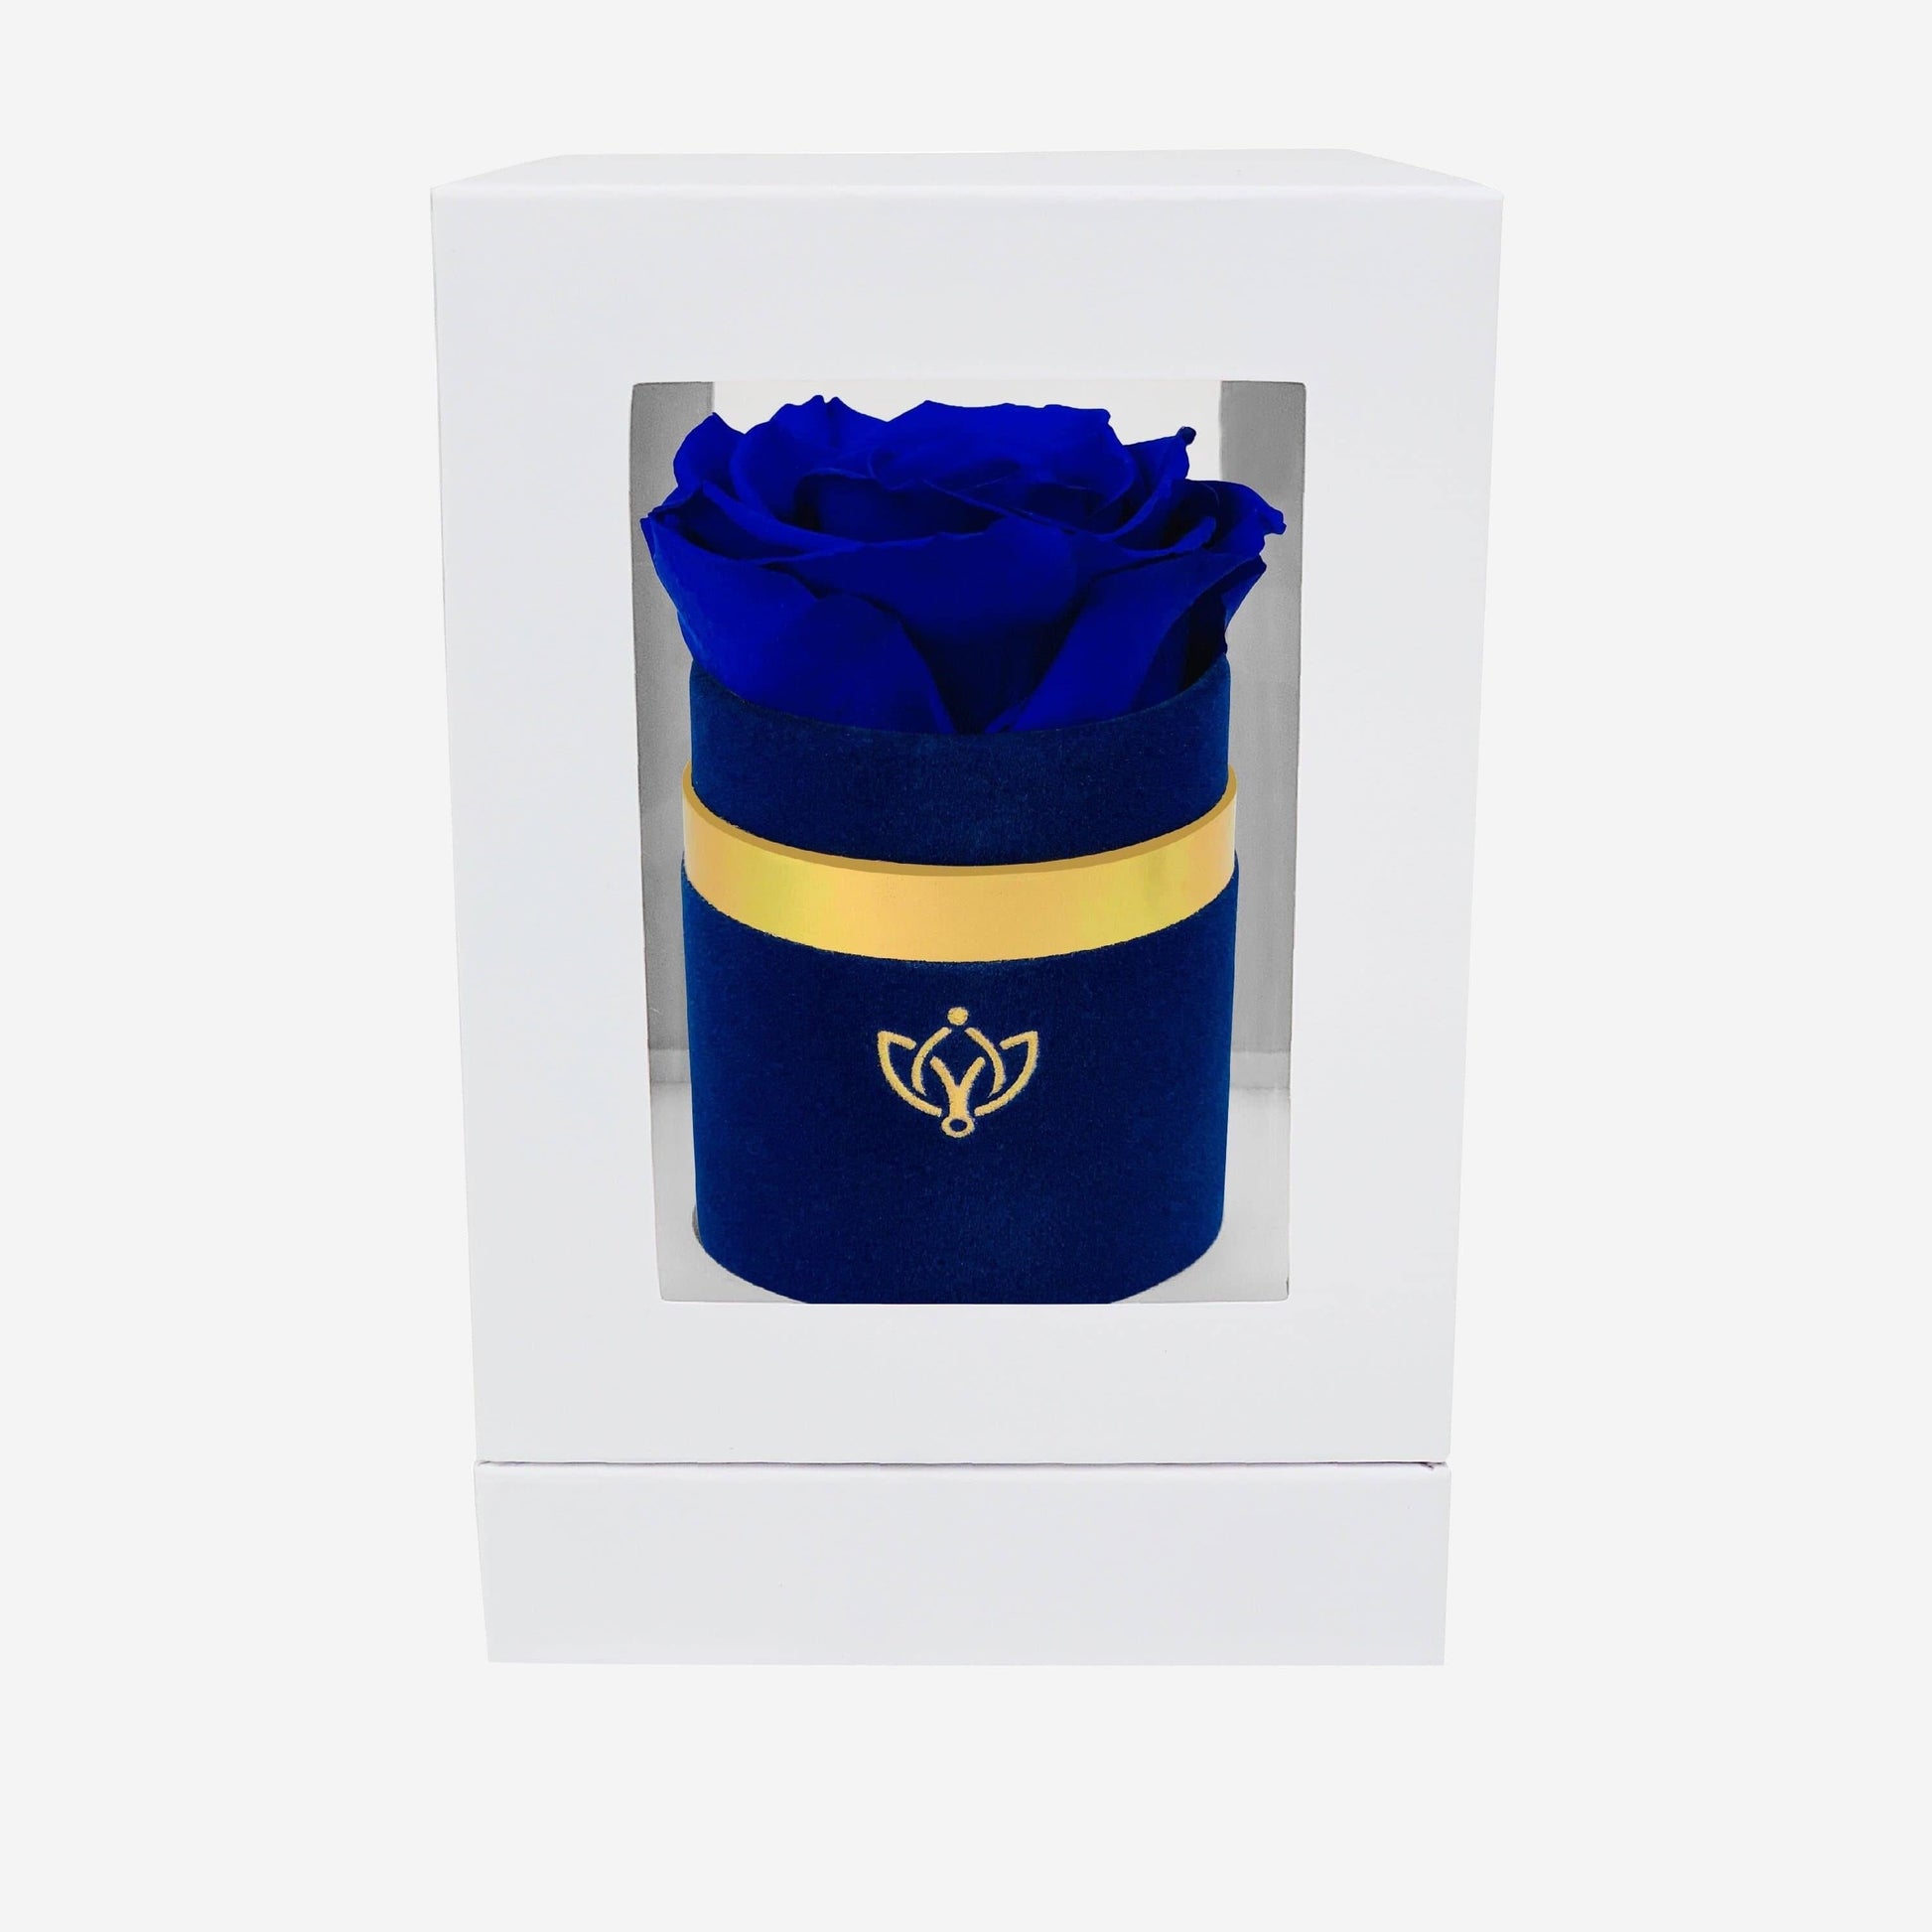 Single Royal Blue Suede Box | Royal Blue Rose - The Million Roses